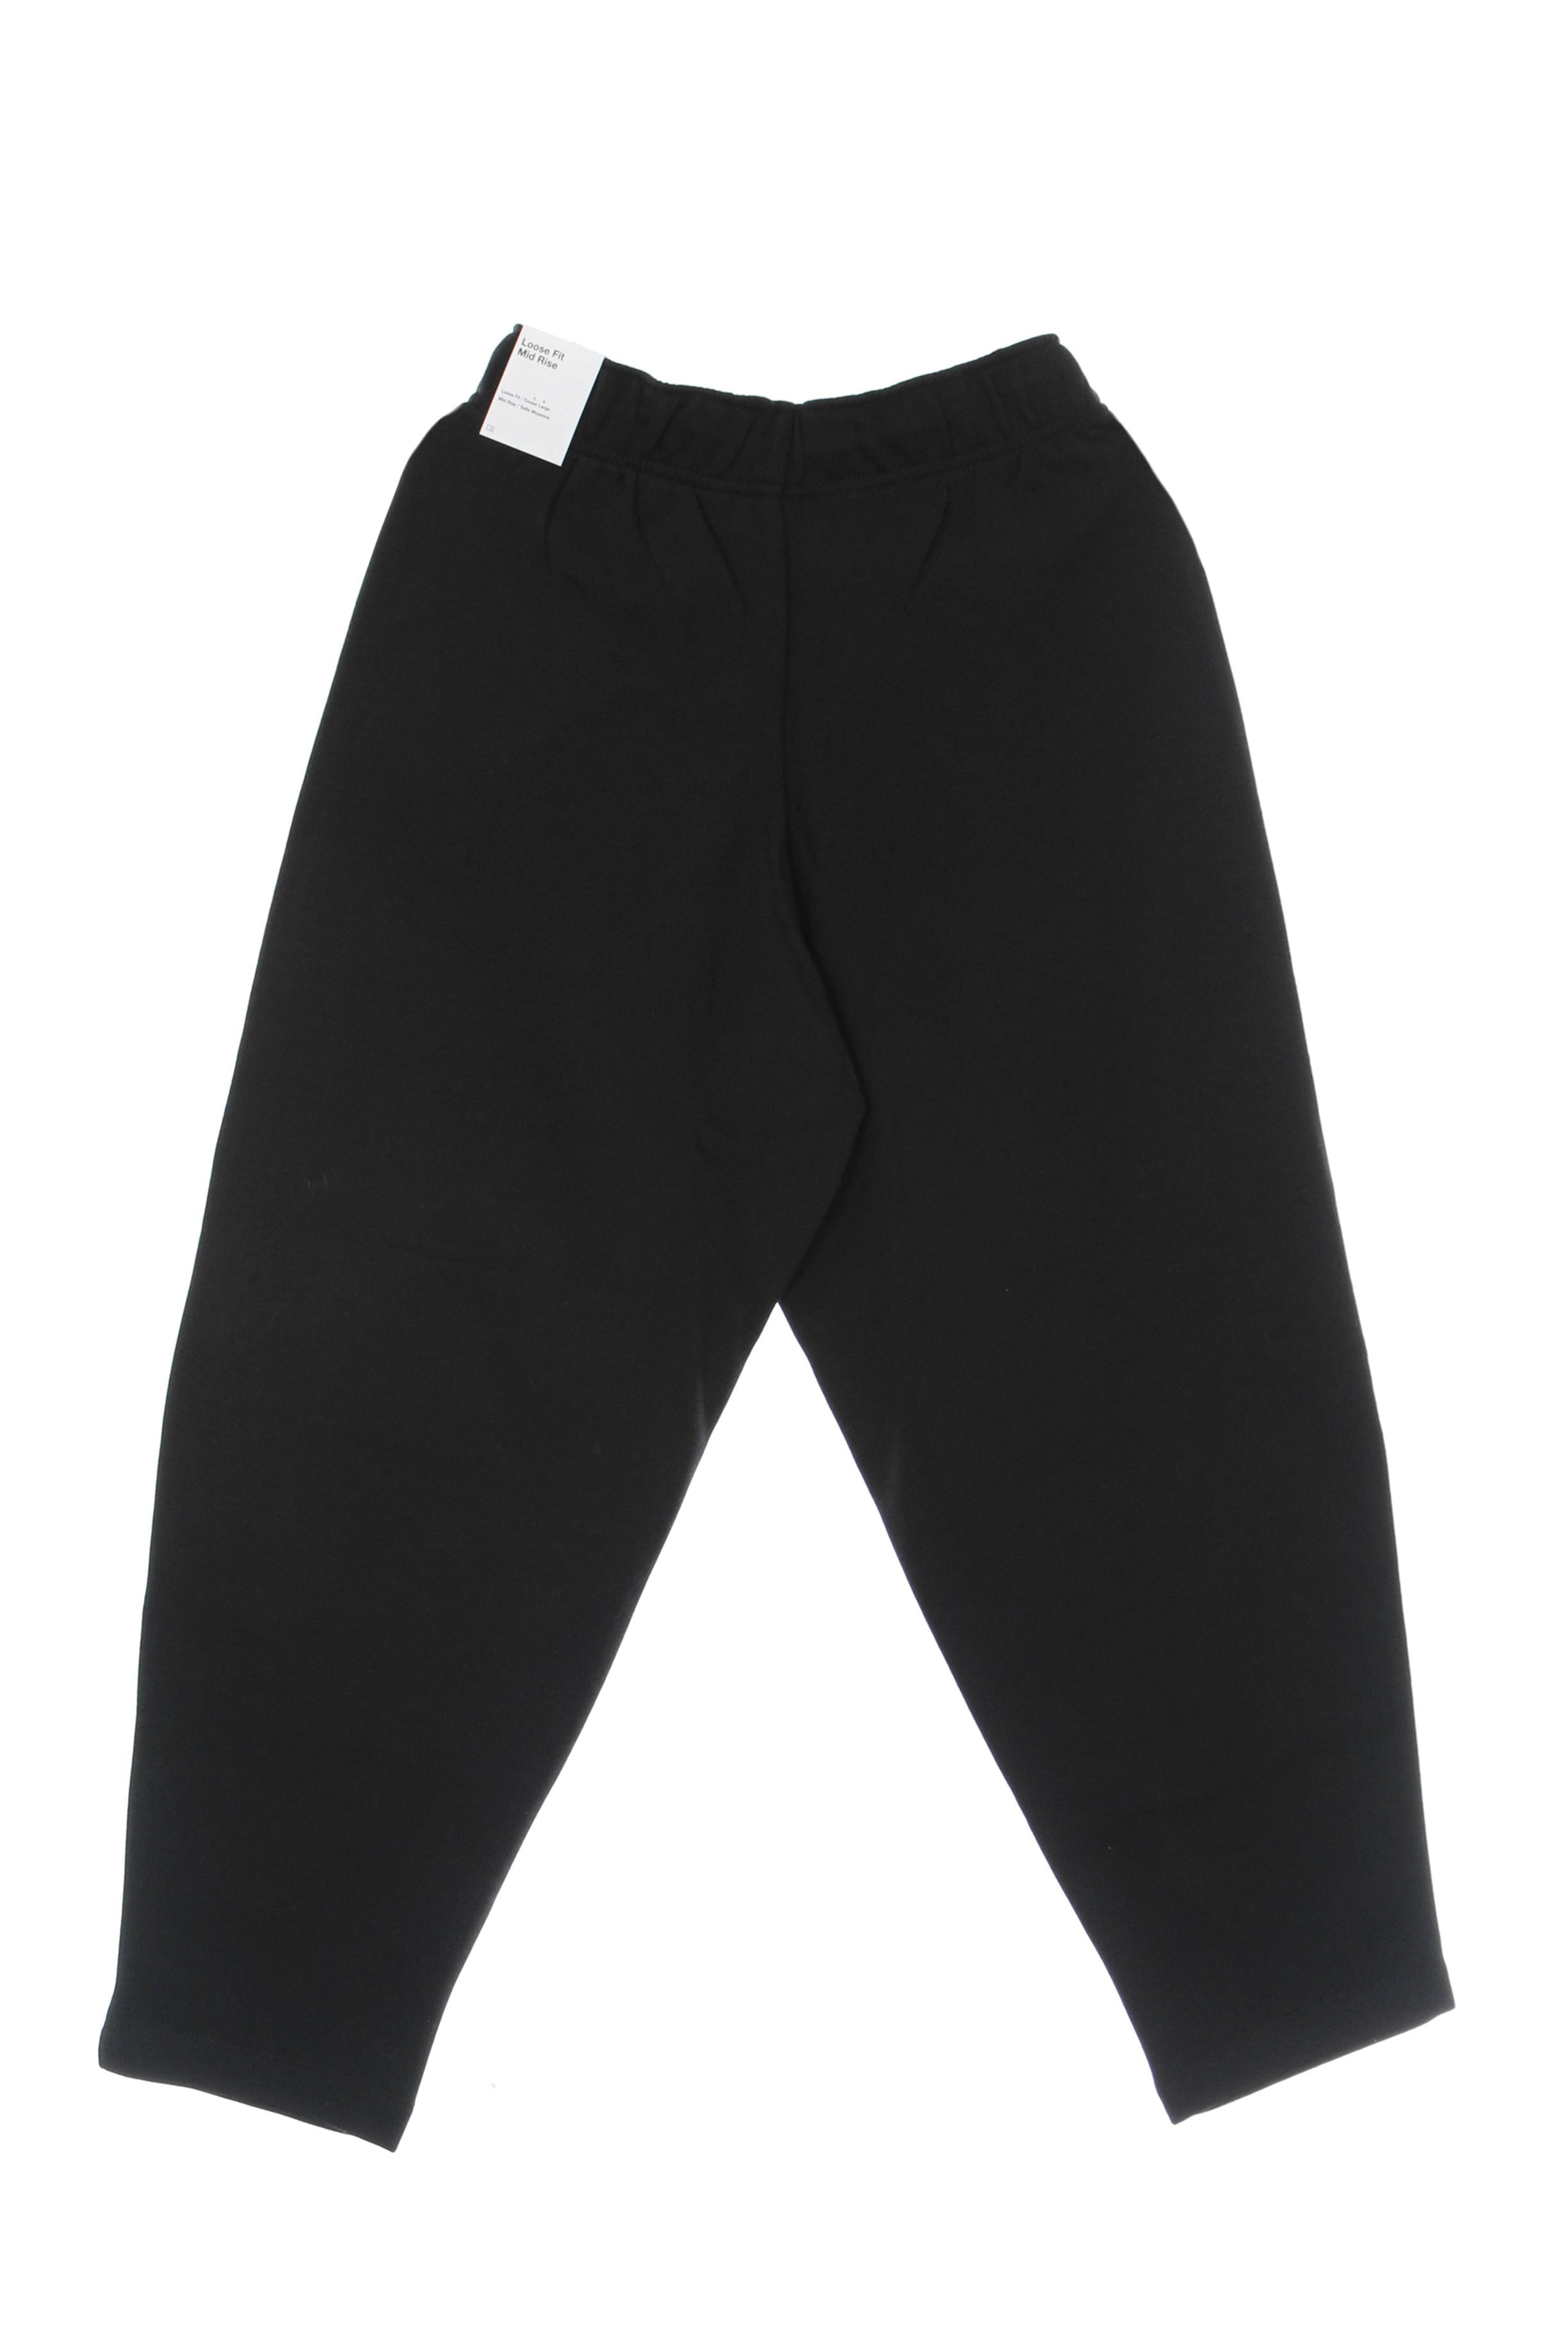 Nike, Pantalone Tuta Felpato Donna W Essentials Collection Fleece Curve Pants, Black/white